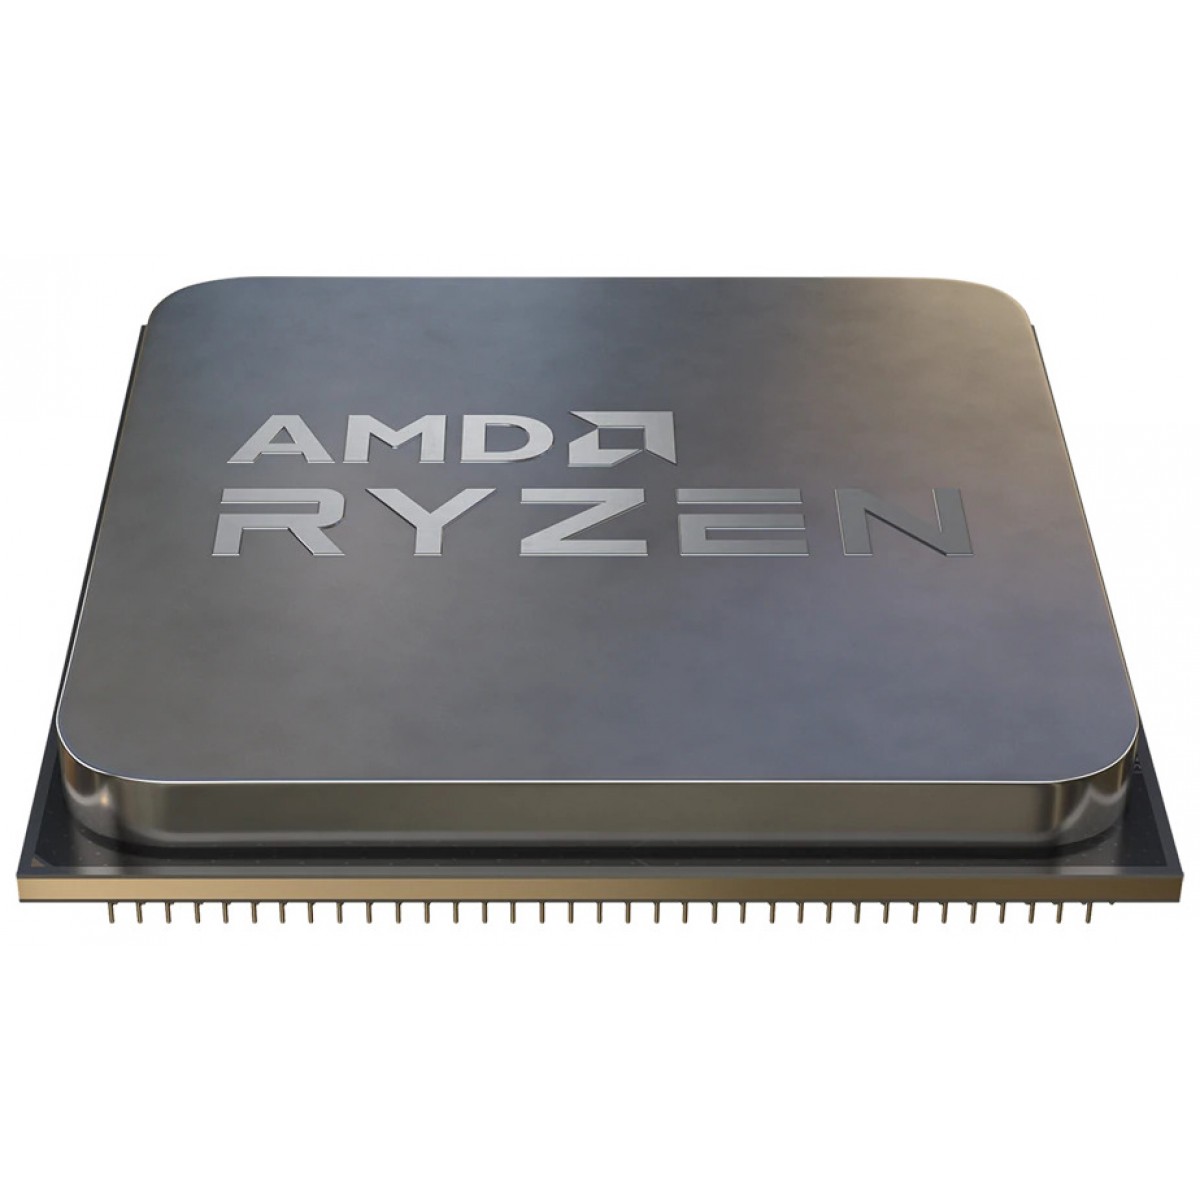 Processador AMD Ryzen 5 5600X 3.7GHz (4.6GHz Turbo), 6-Cores 12-Threads, Cooler Wraith Stealth, AM4, 100-100000065BOX